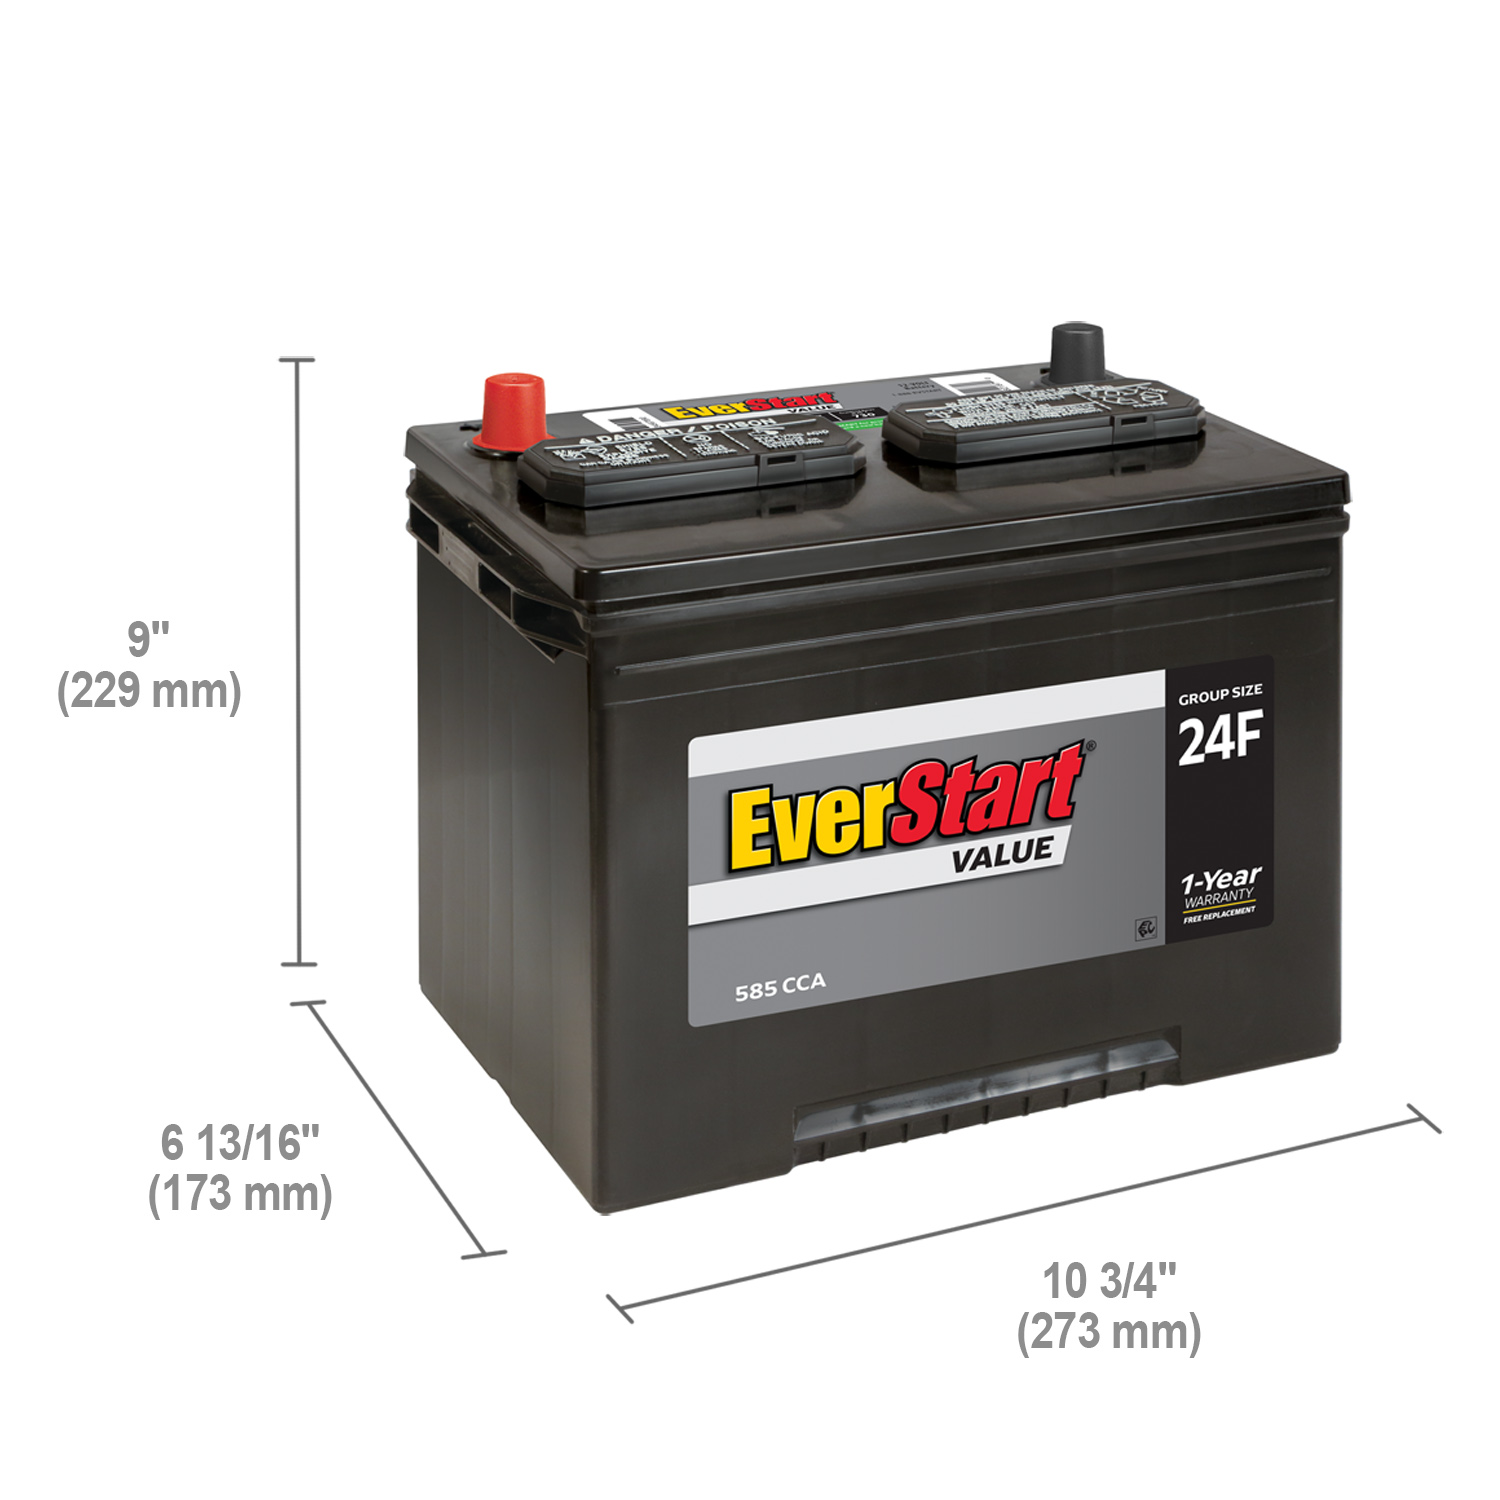 EverStart Value Lead Acid Automotive Battery, Group Size 24F 12 Volt, 585 CCA - image 2 of 7